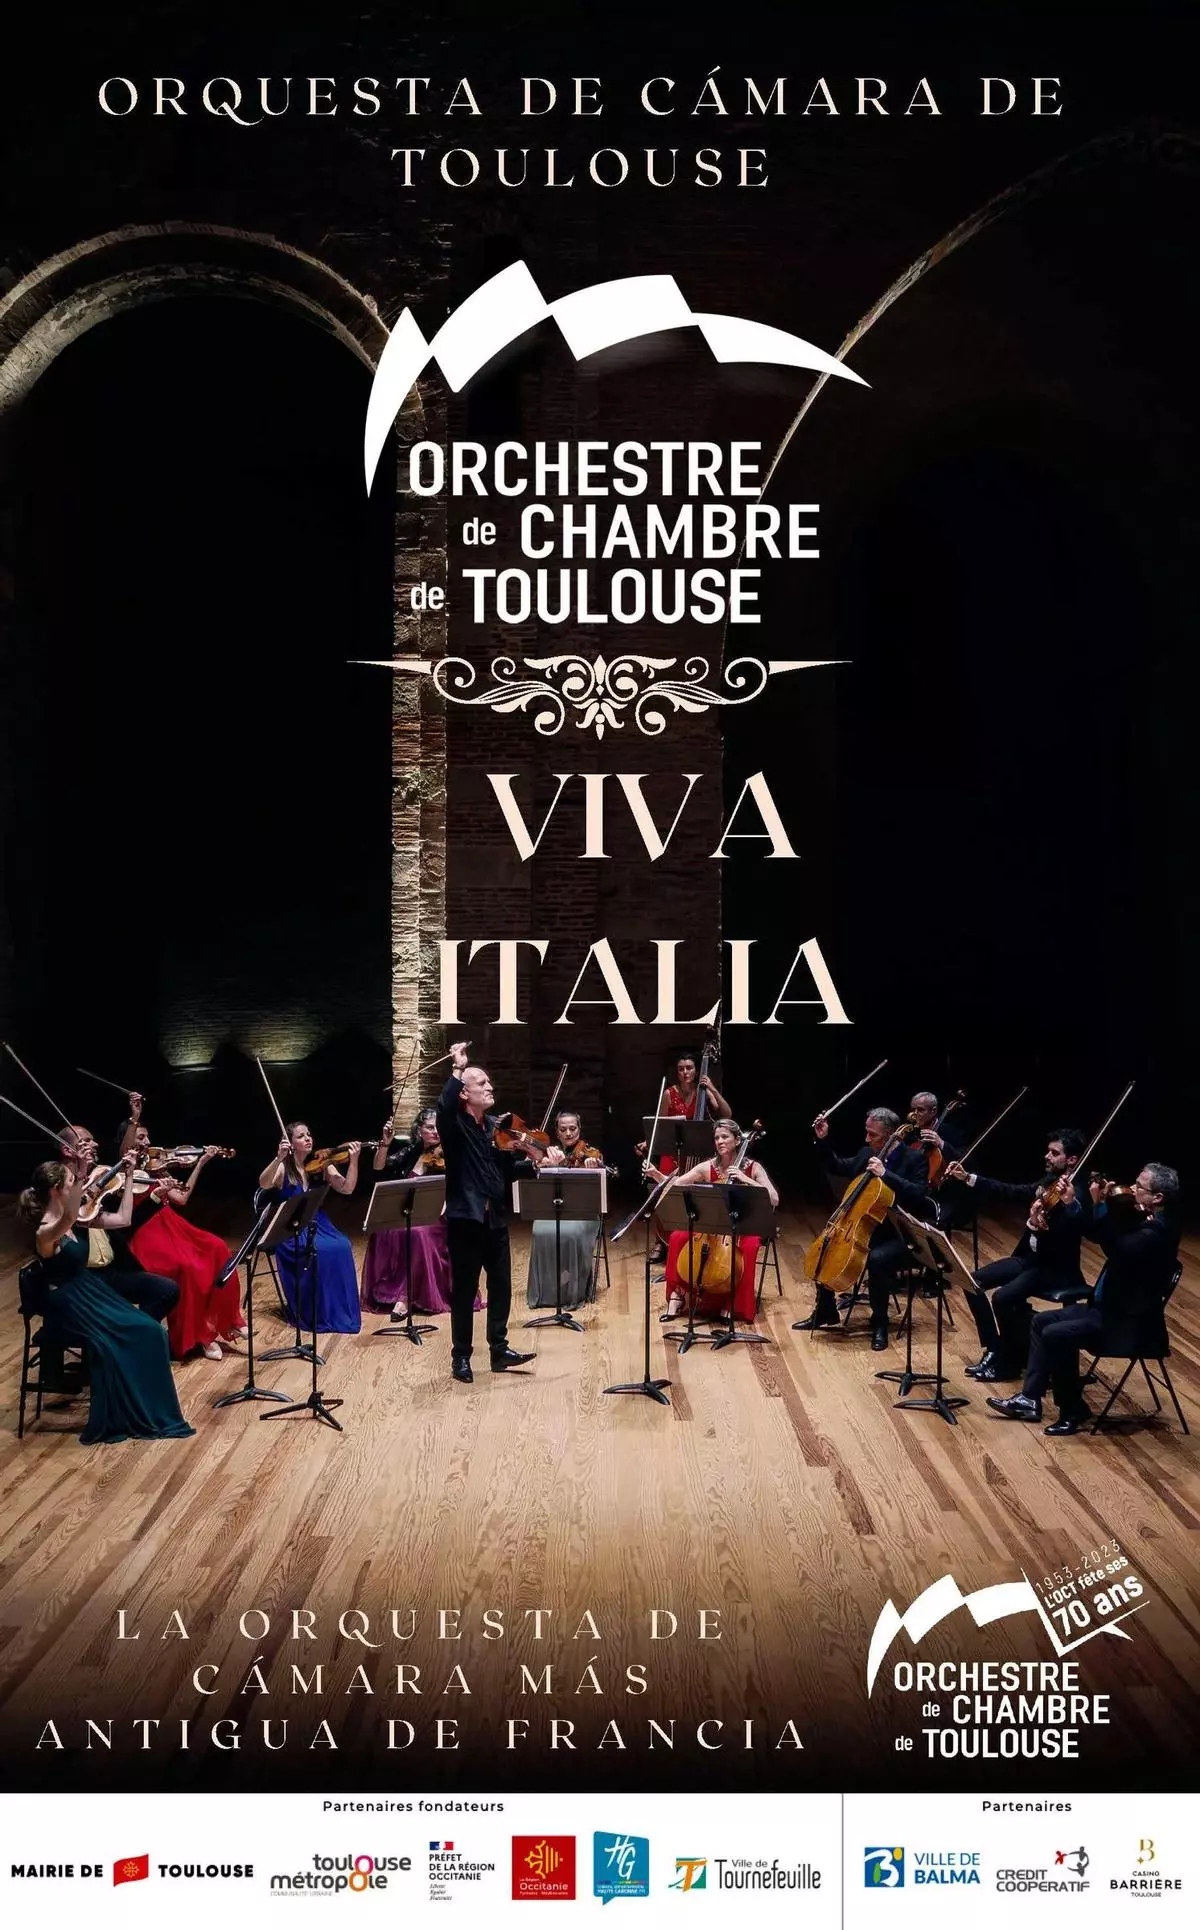 Orquesta de Cámara de Toulouse: "Viva Italia"